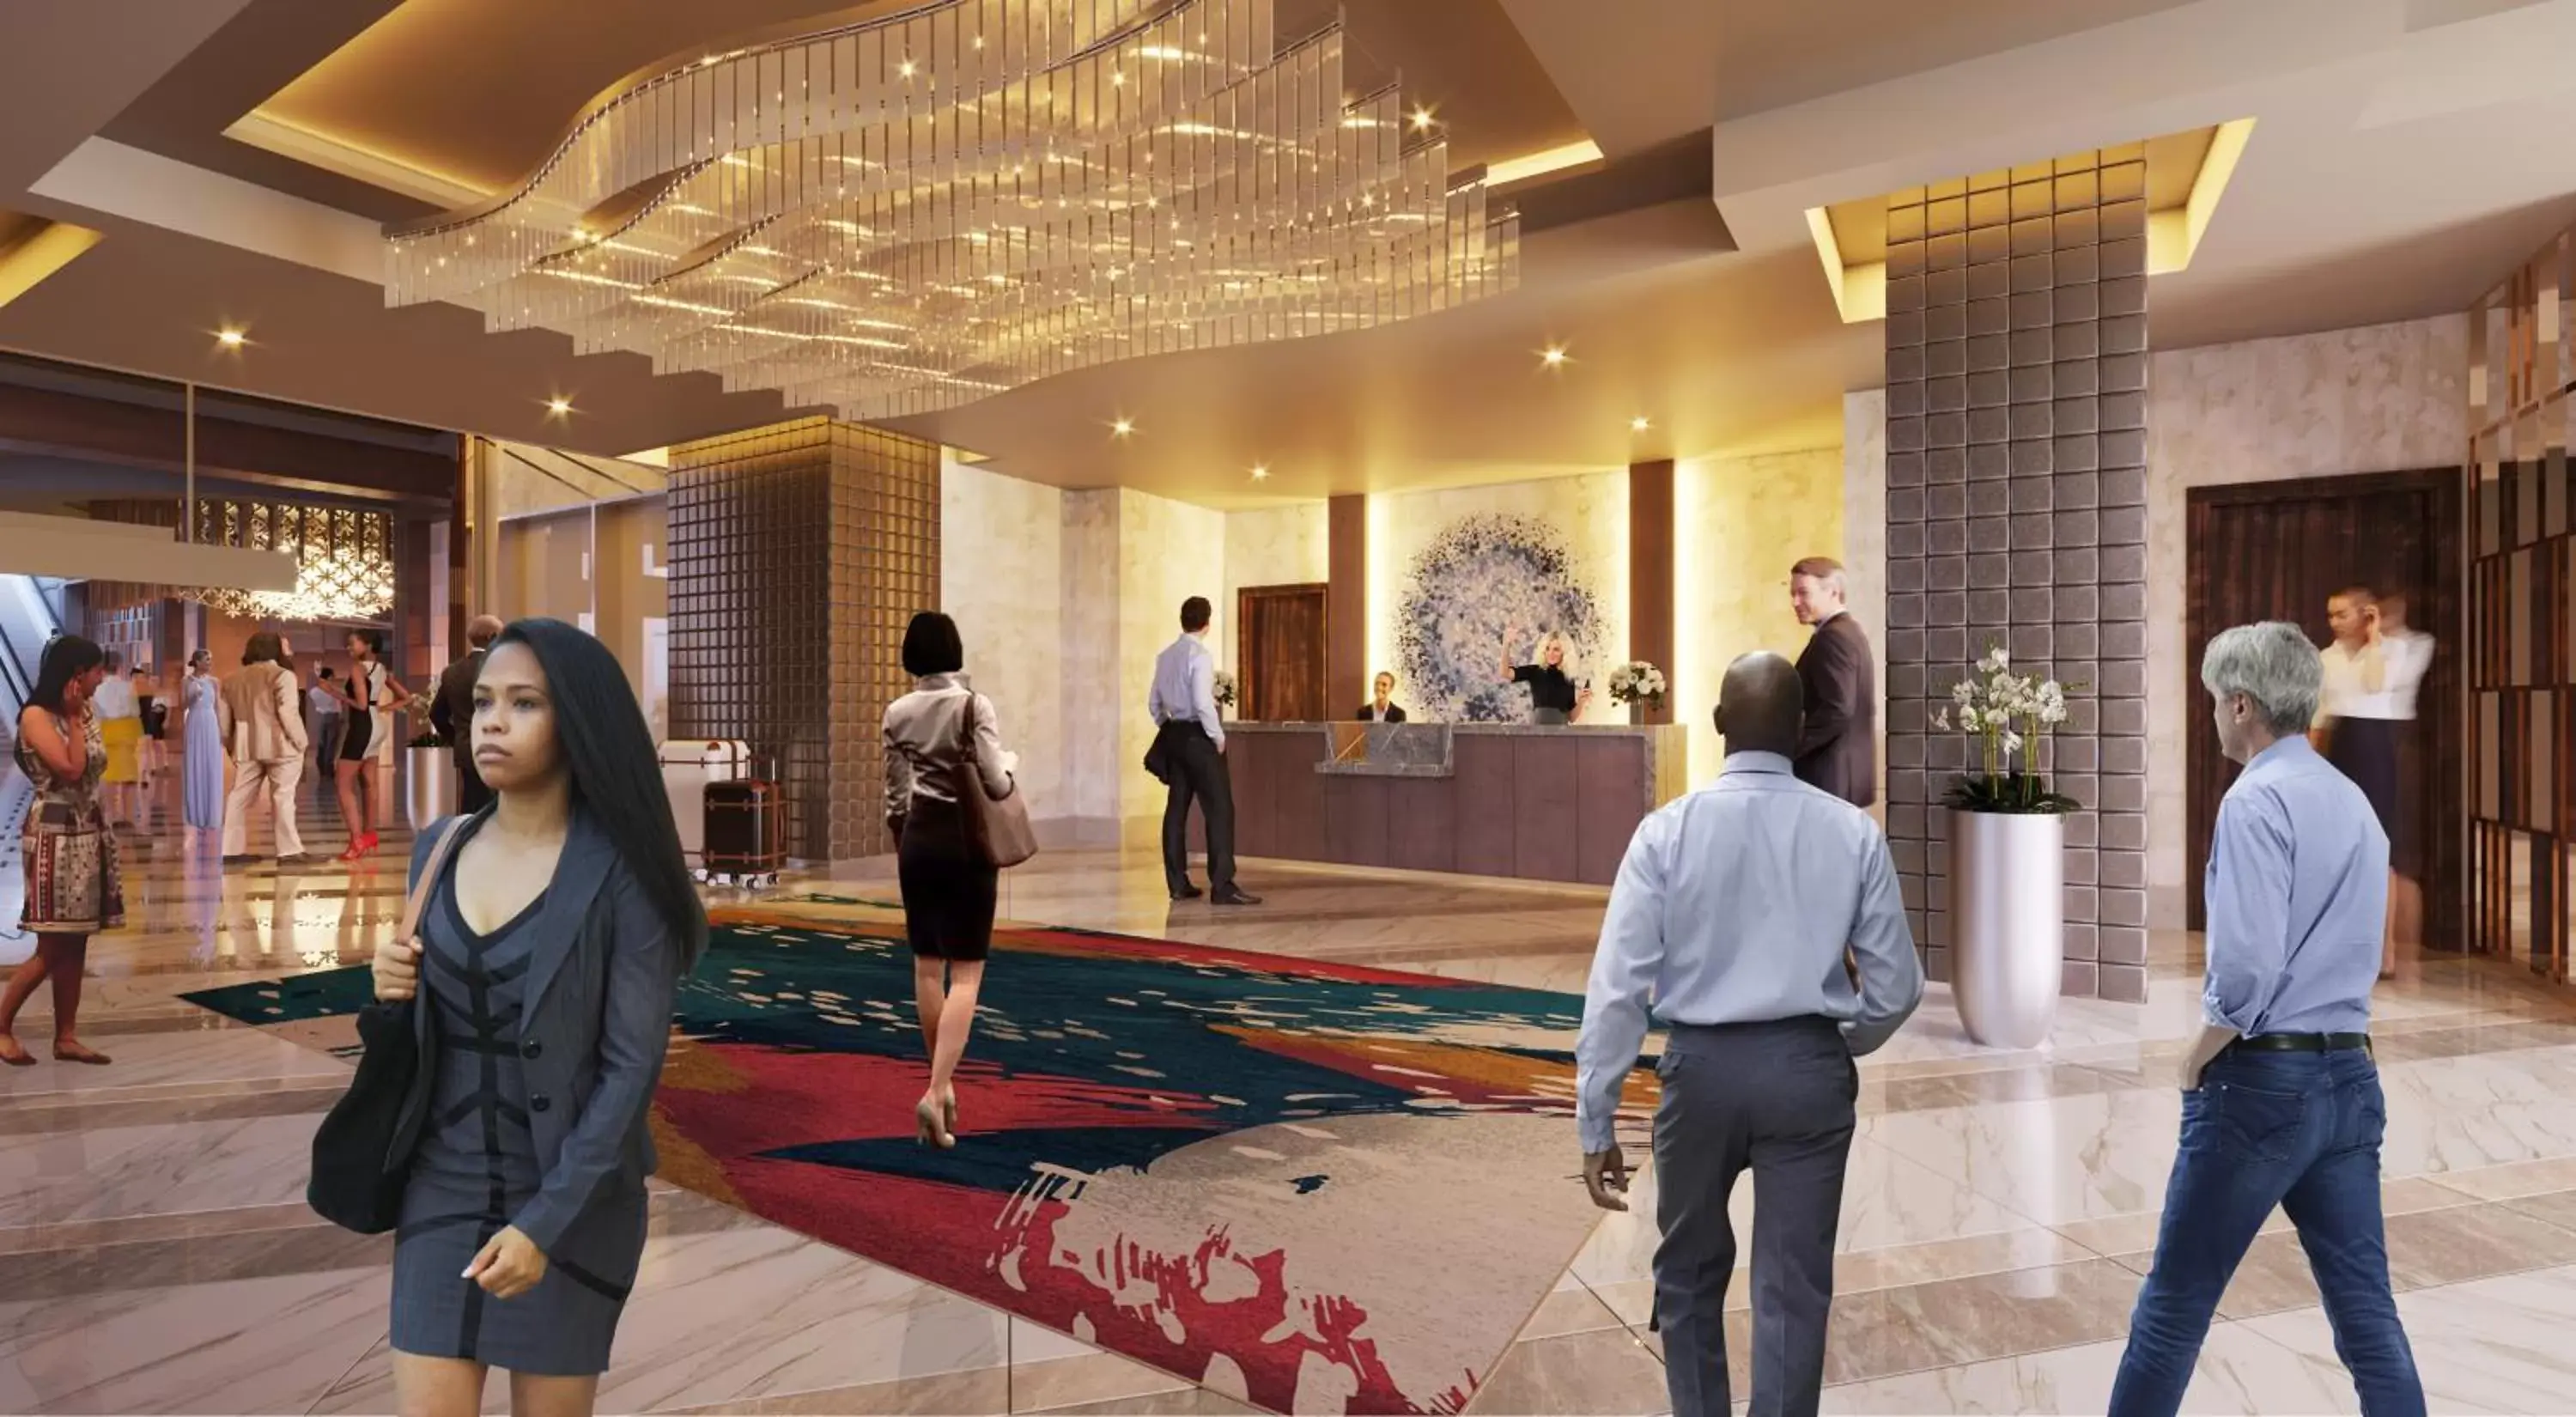 Lobby or reception in Live! Casino & Hotel - Philadelphia